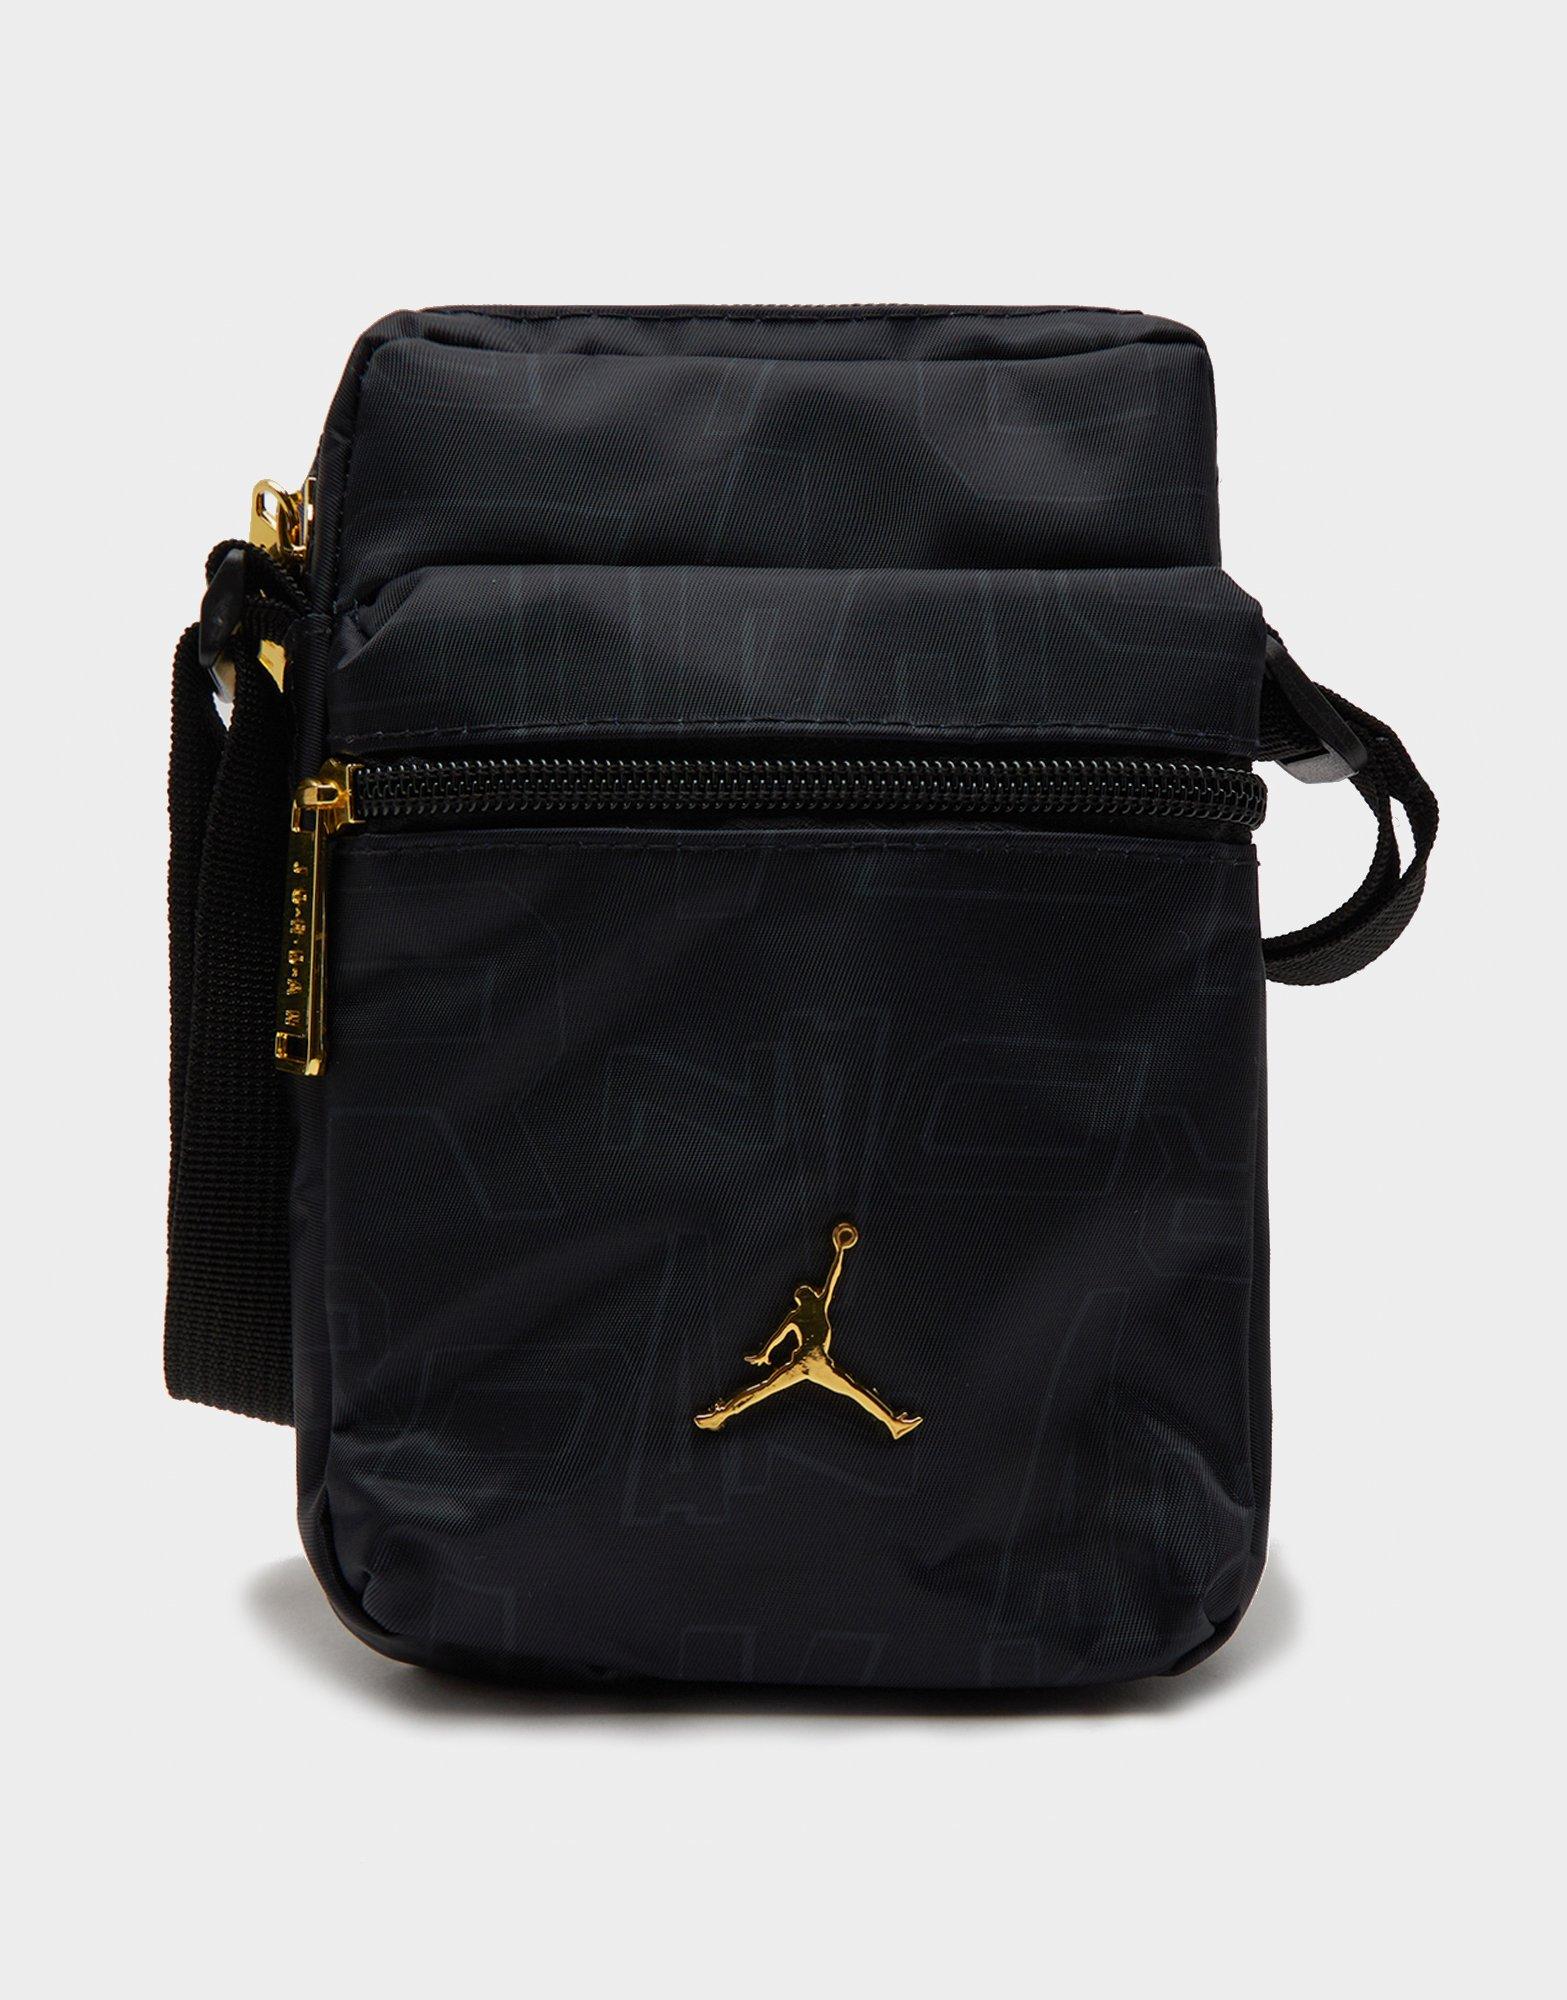 Jordan Air All Over Print Small Items Bag - JD Sports